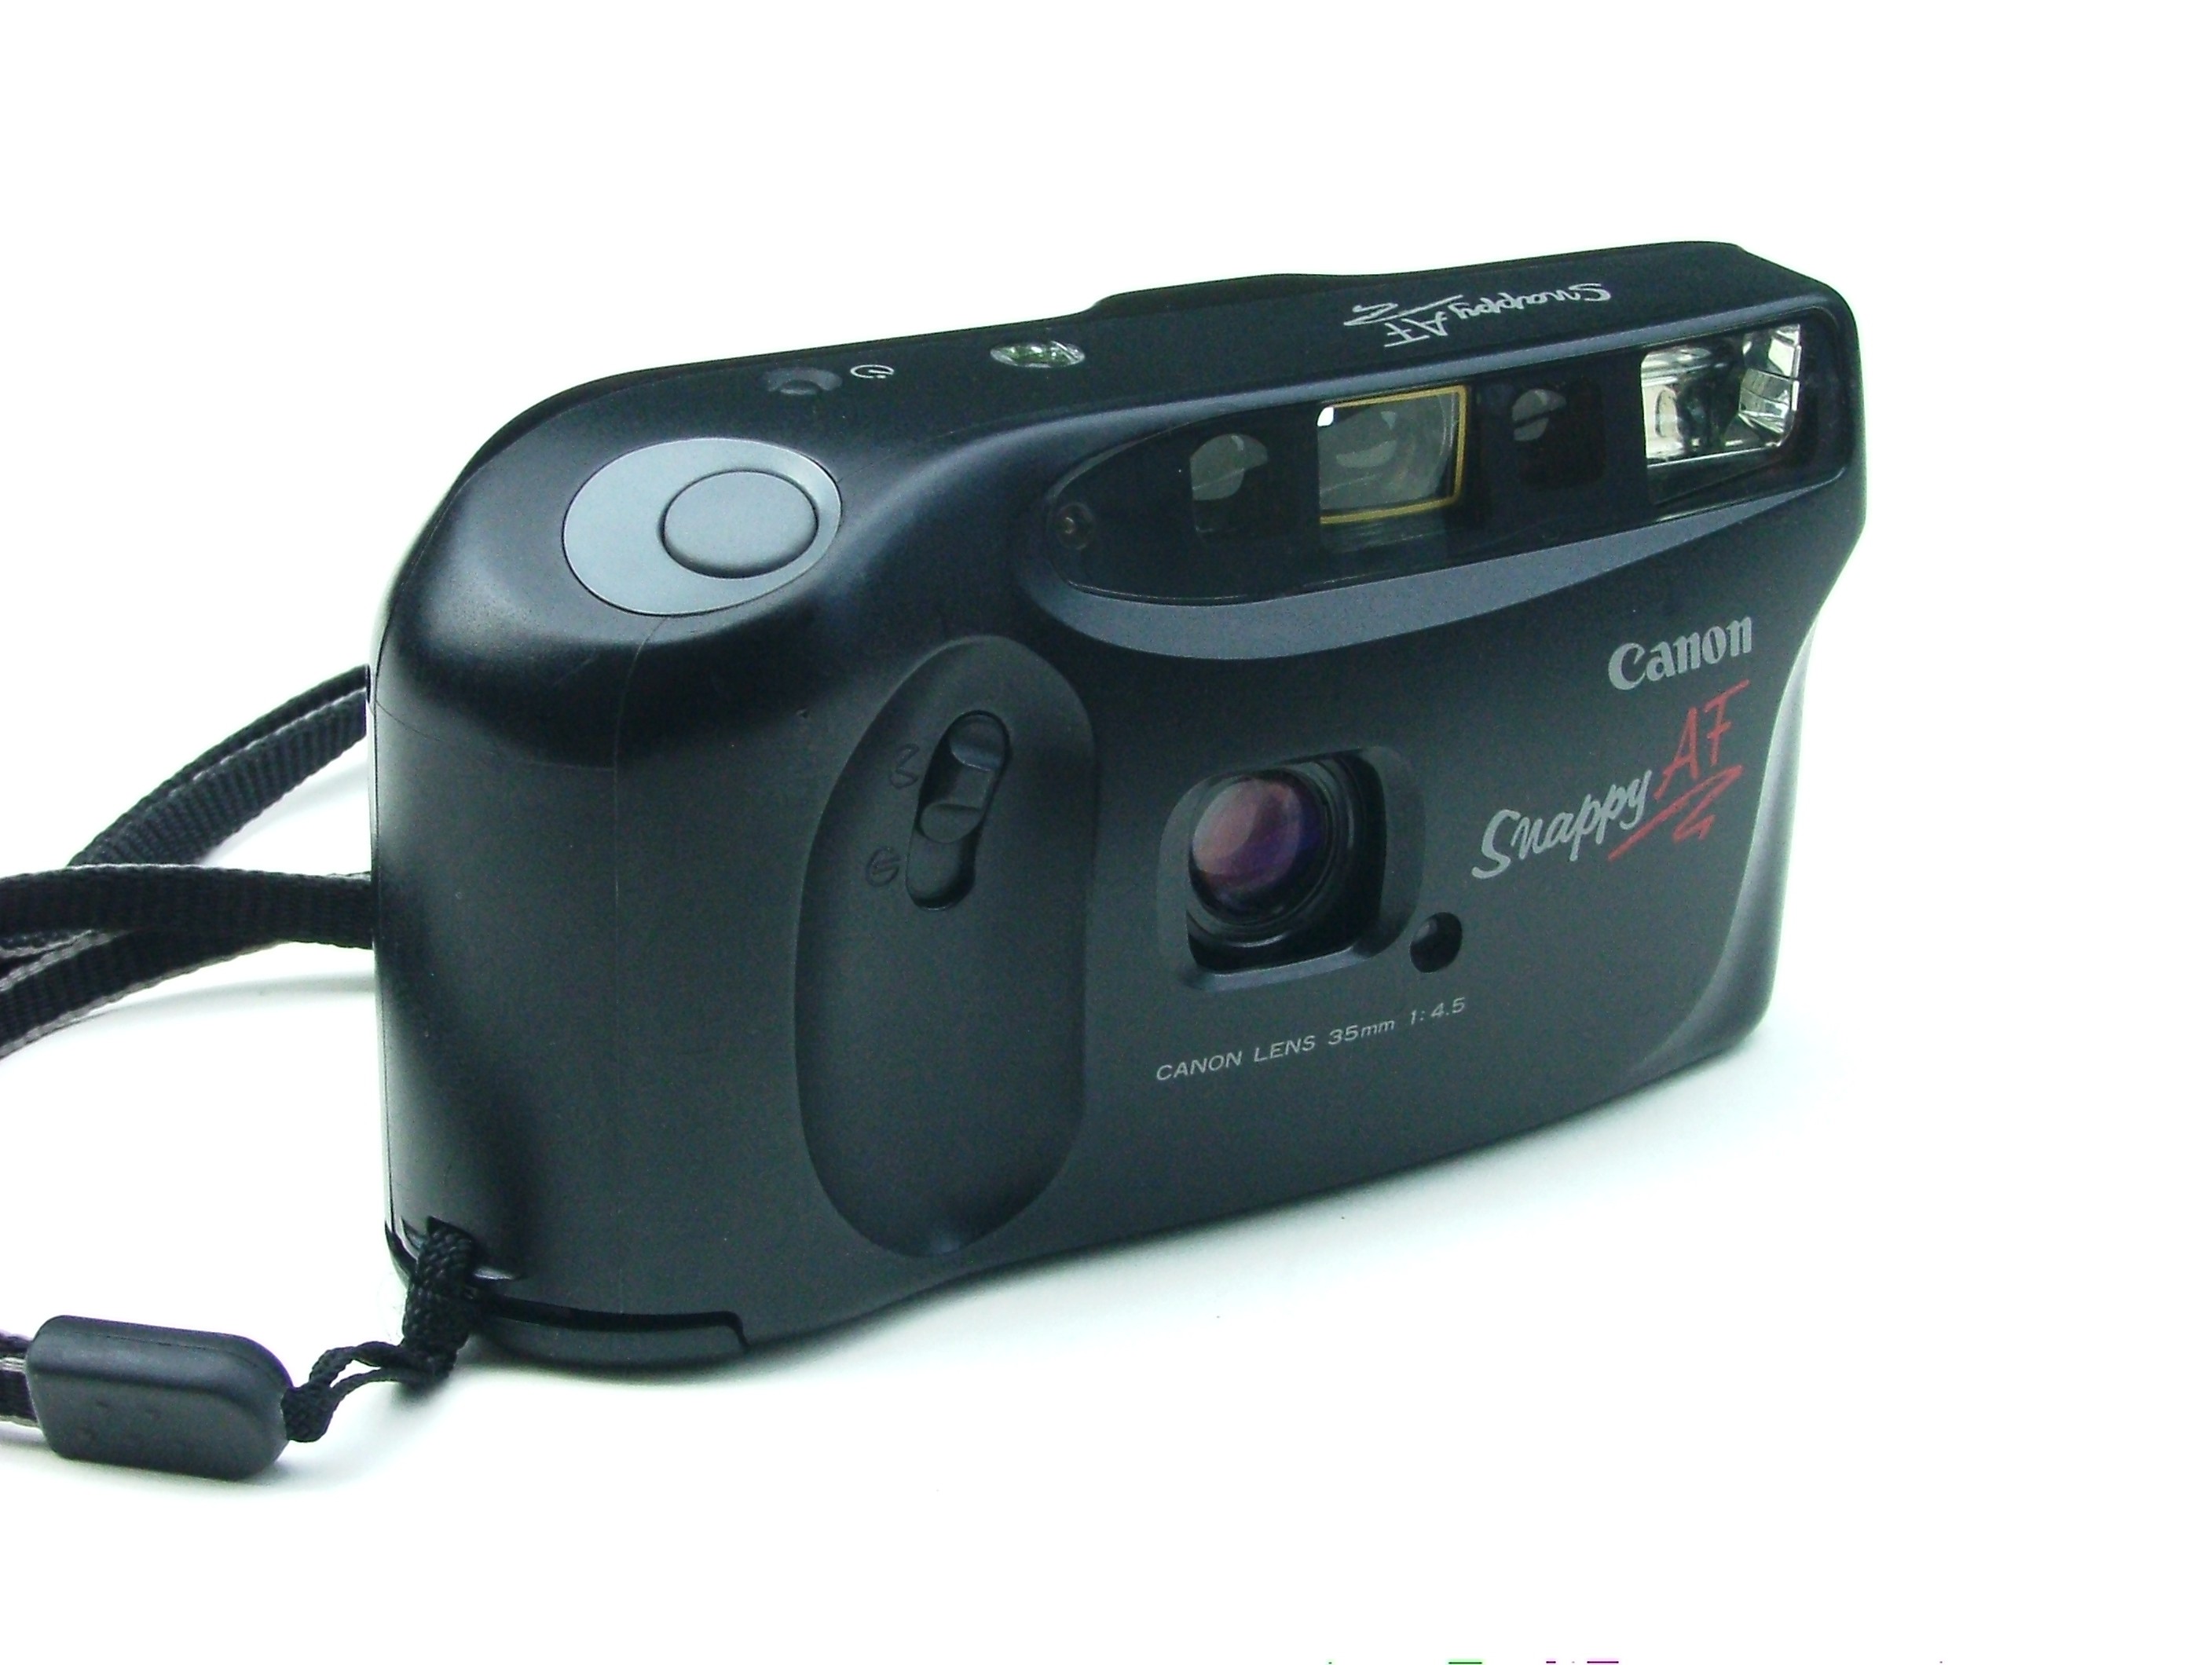 90s camera